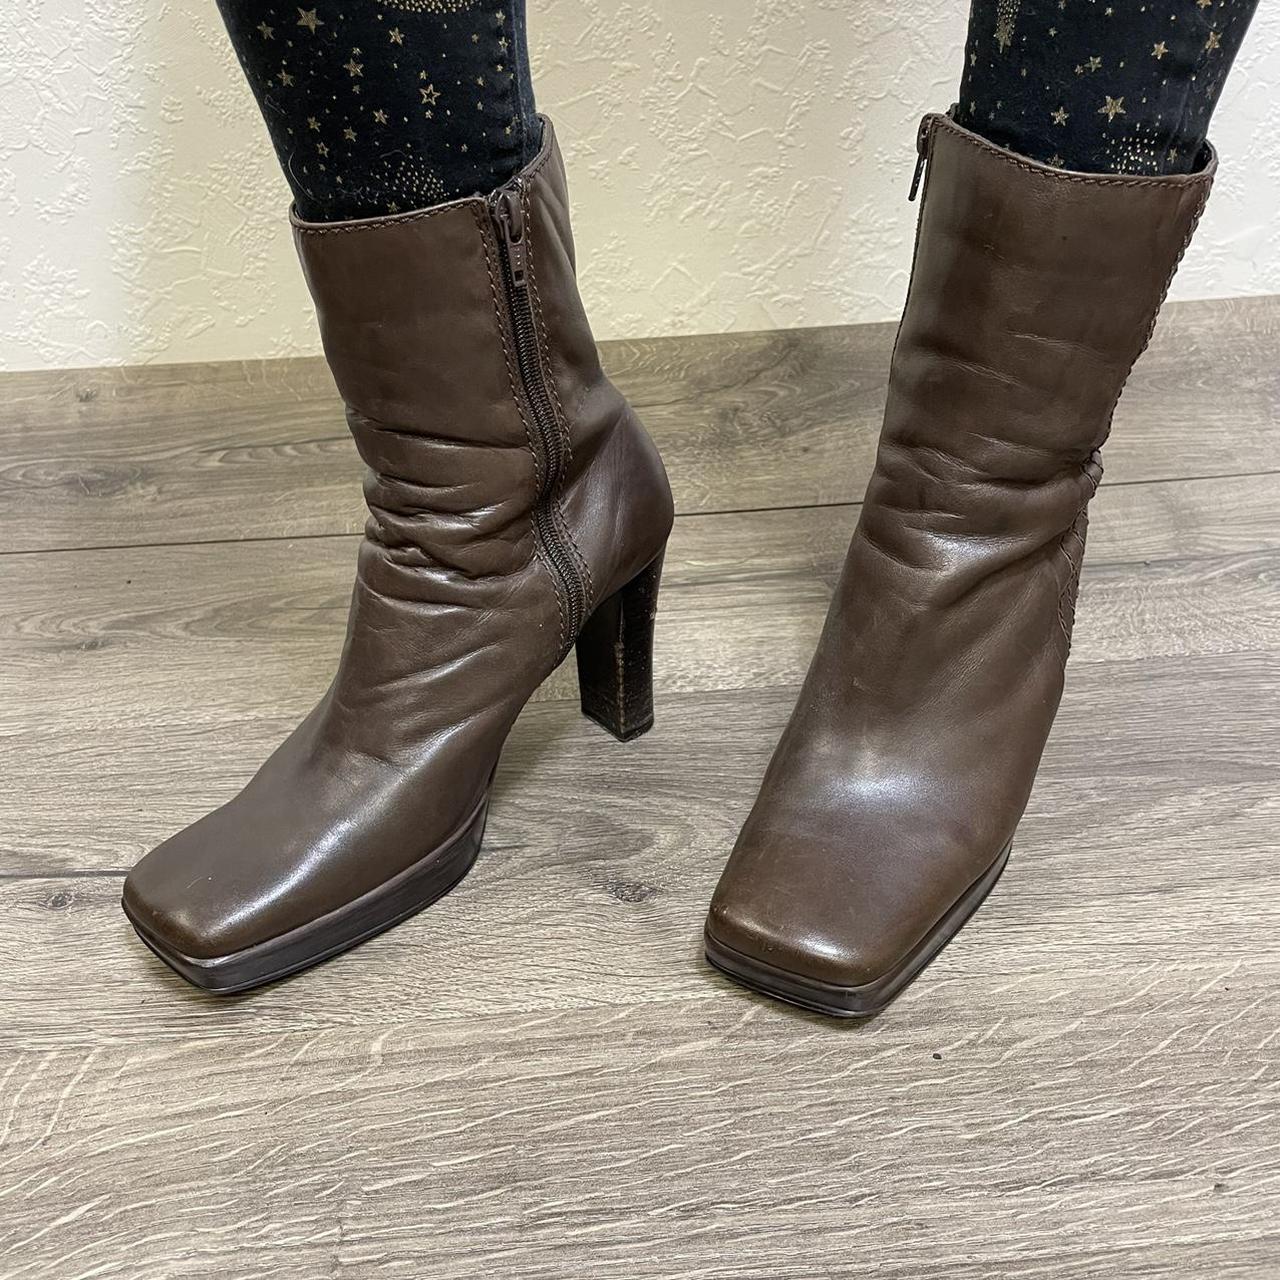 💥🖤Vintage 90s/Y2K brown leather platform boots with